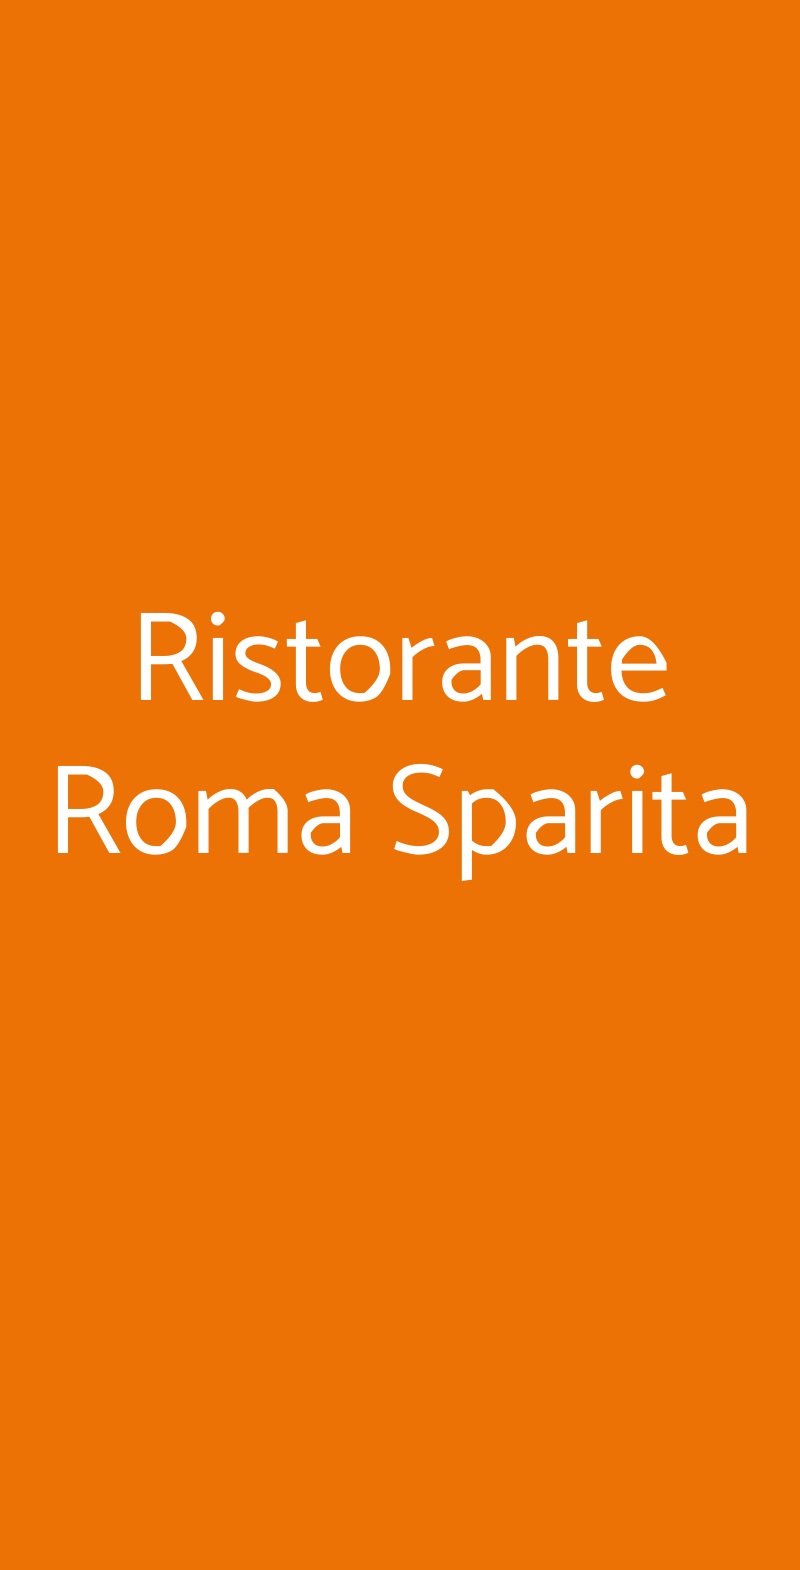 Ristorante Roma Sparita Roma menù 1 pagina